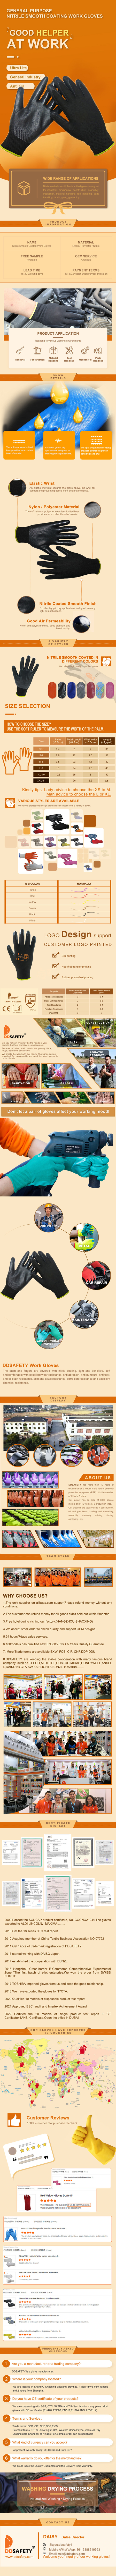 Black Nylon Seamless Nitrile Smooth Coated Safety Work Hand Gloves - DNN418 Black Nylon Seamless Nitrile Smooth Coated Safety Work Hand Gloves - DNN418 gloves,nitrile gloves,nitrile coated gloves,black nitrile gloves,hand gloves